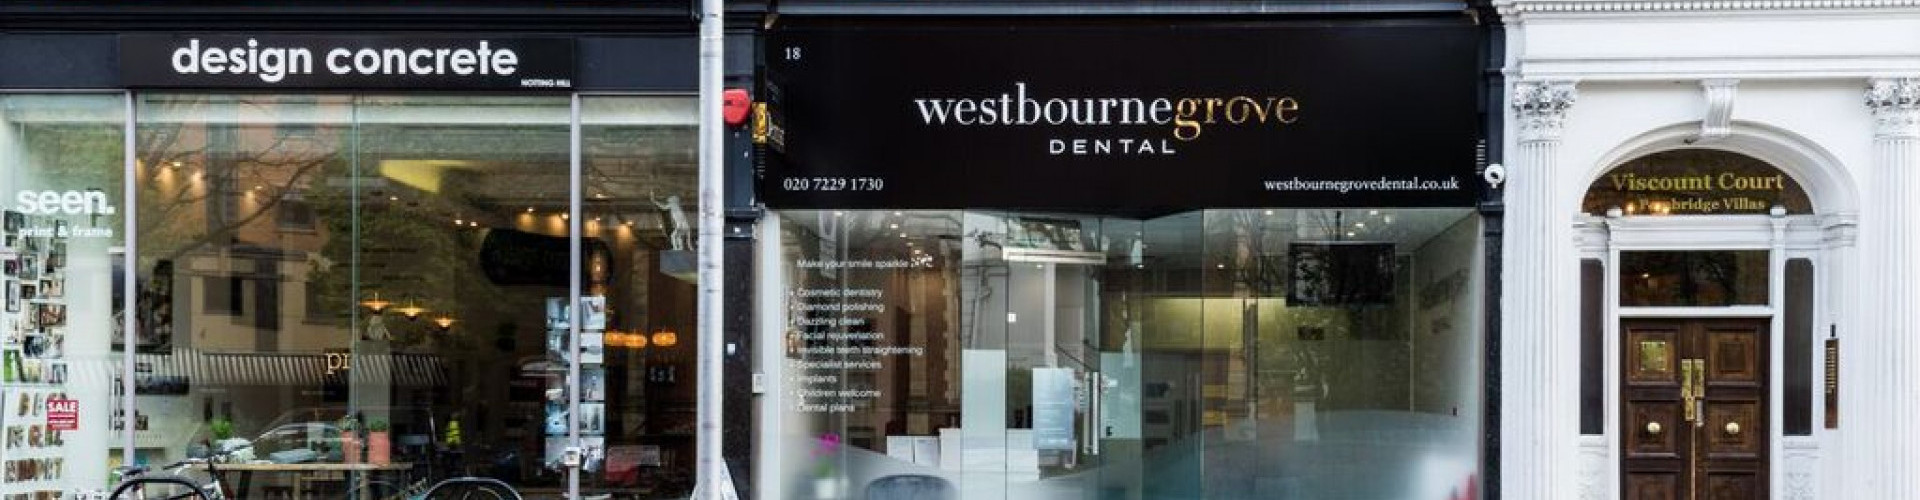  Westbourne Grove Dental Slider 1